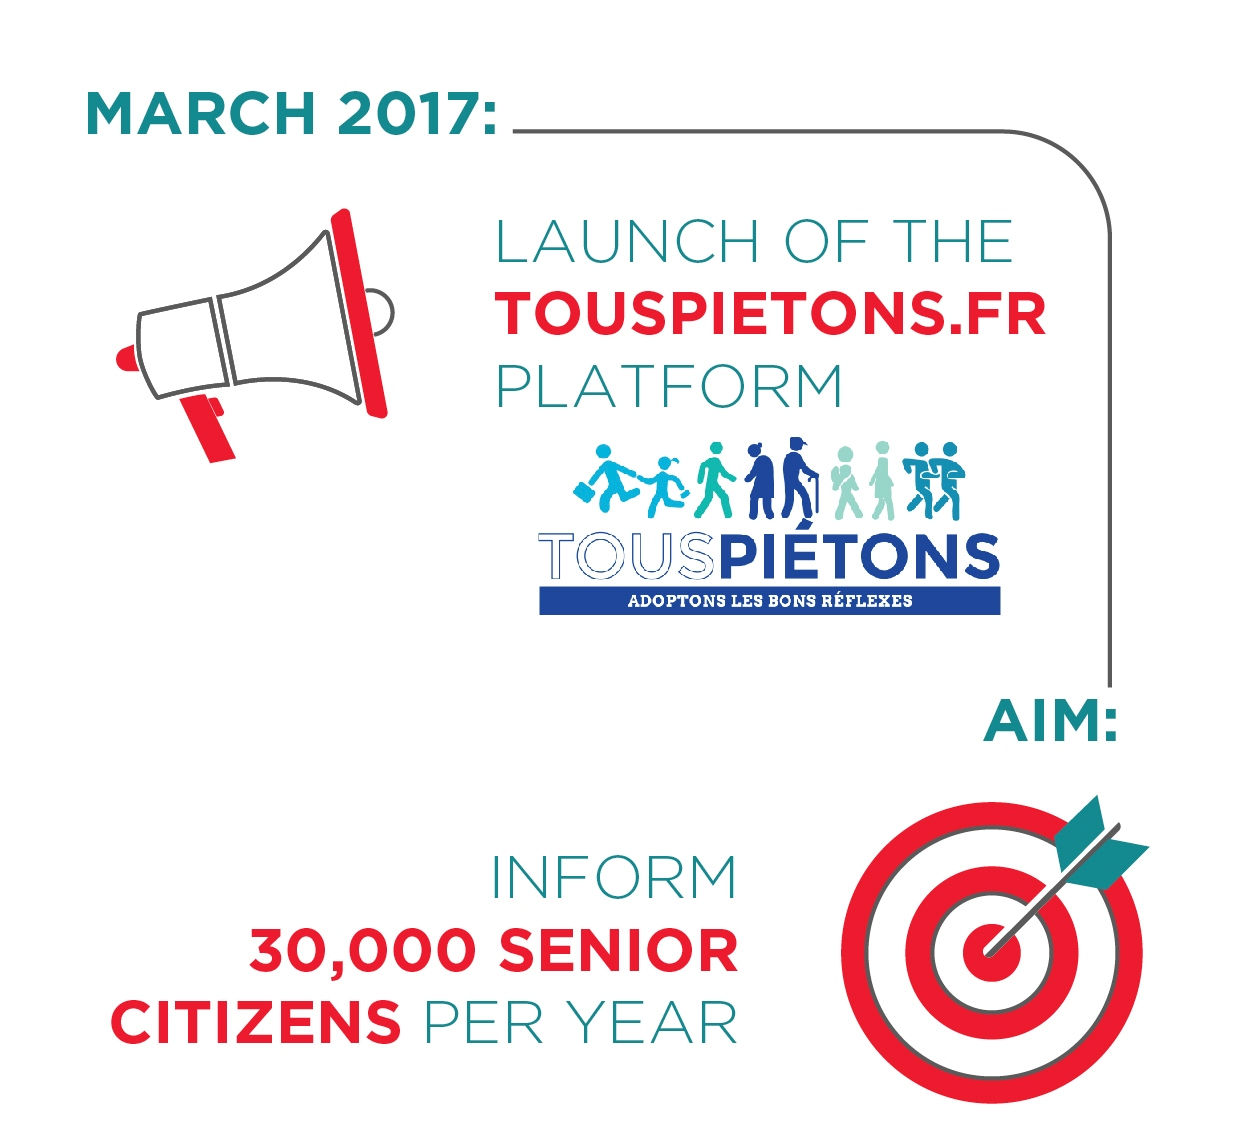 Launch of the touspietons.fr platform